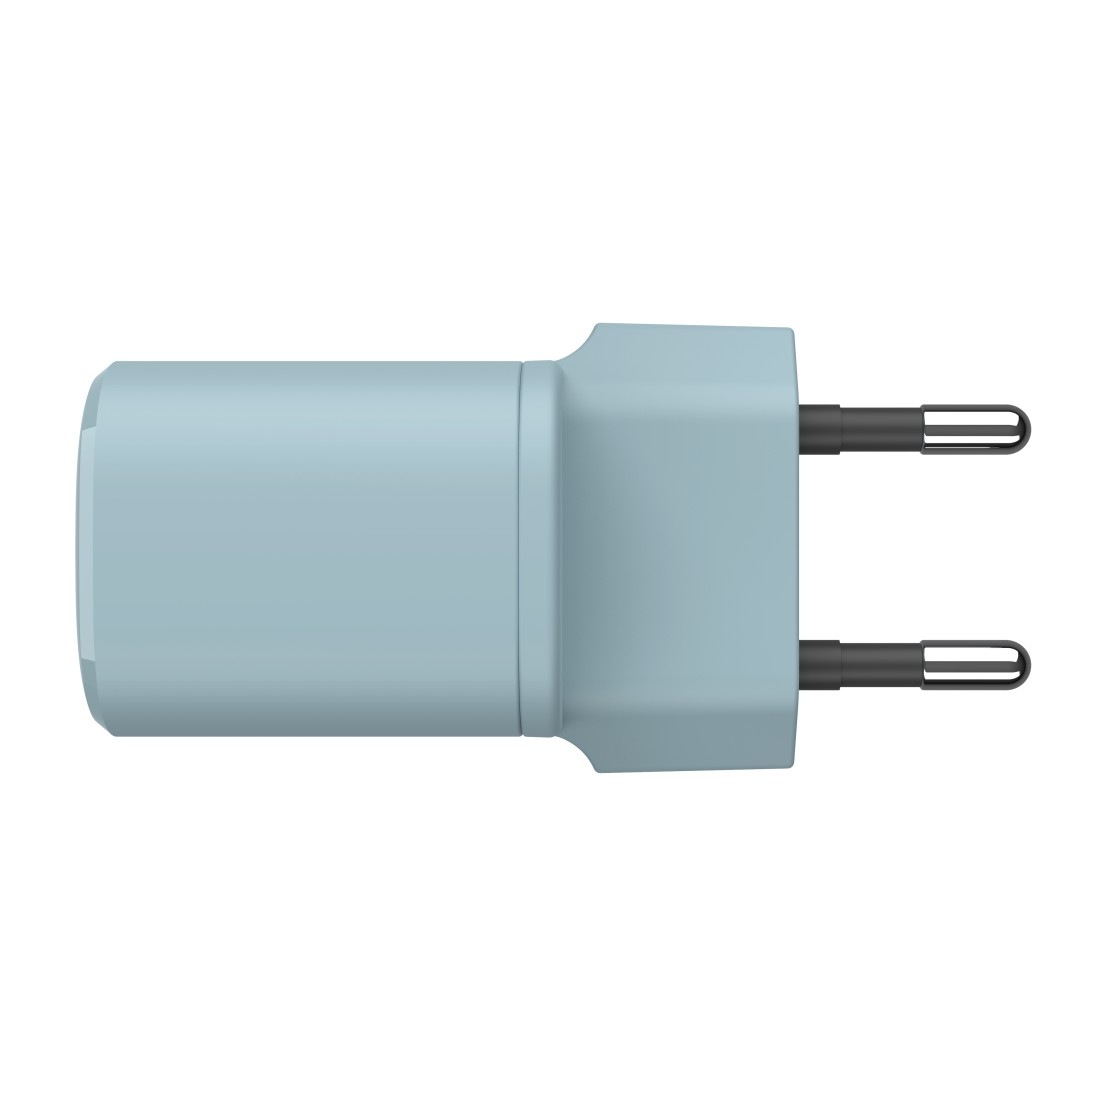 Fresh´n Rebel Schnelllade-Gerät »USB-C Mini Charger PD 20W, Apple Lightning-Kabel 2 m«, (2 St.)